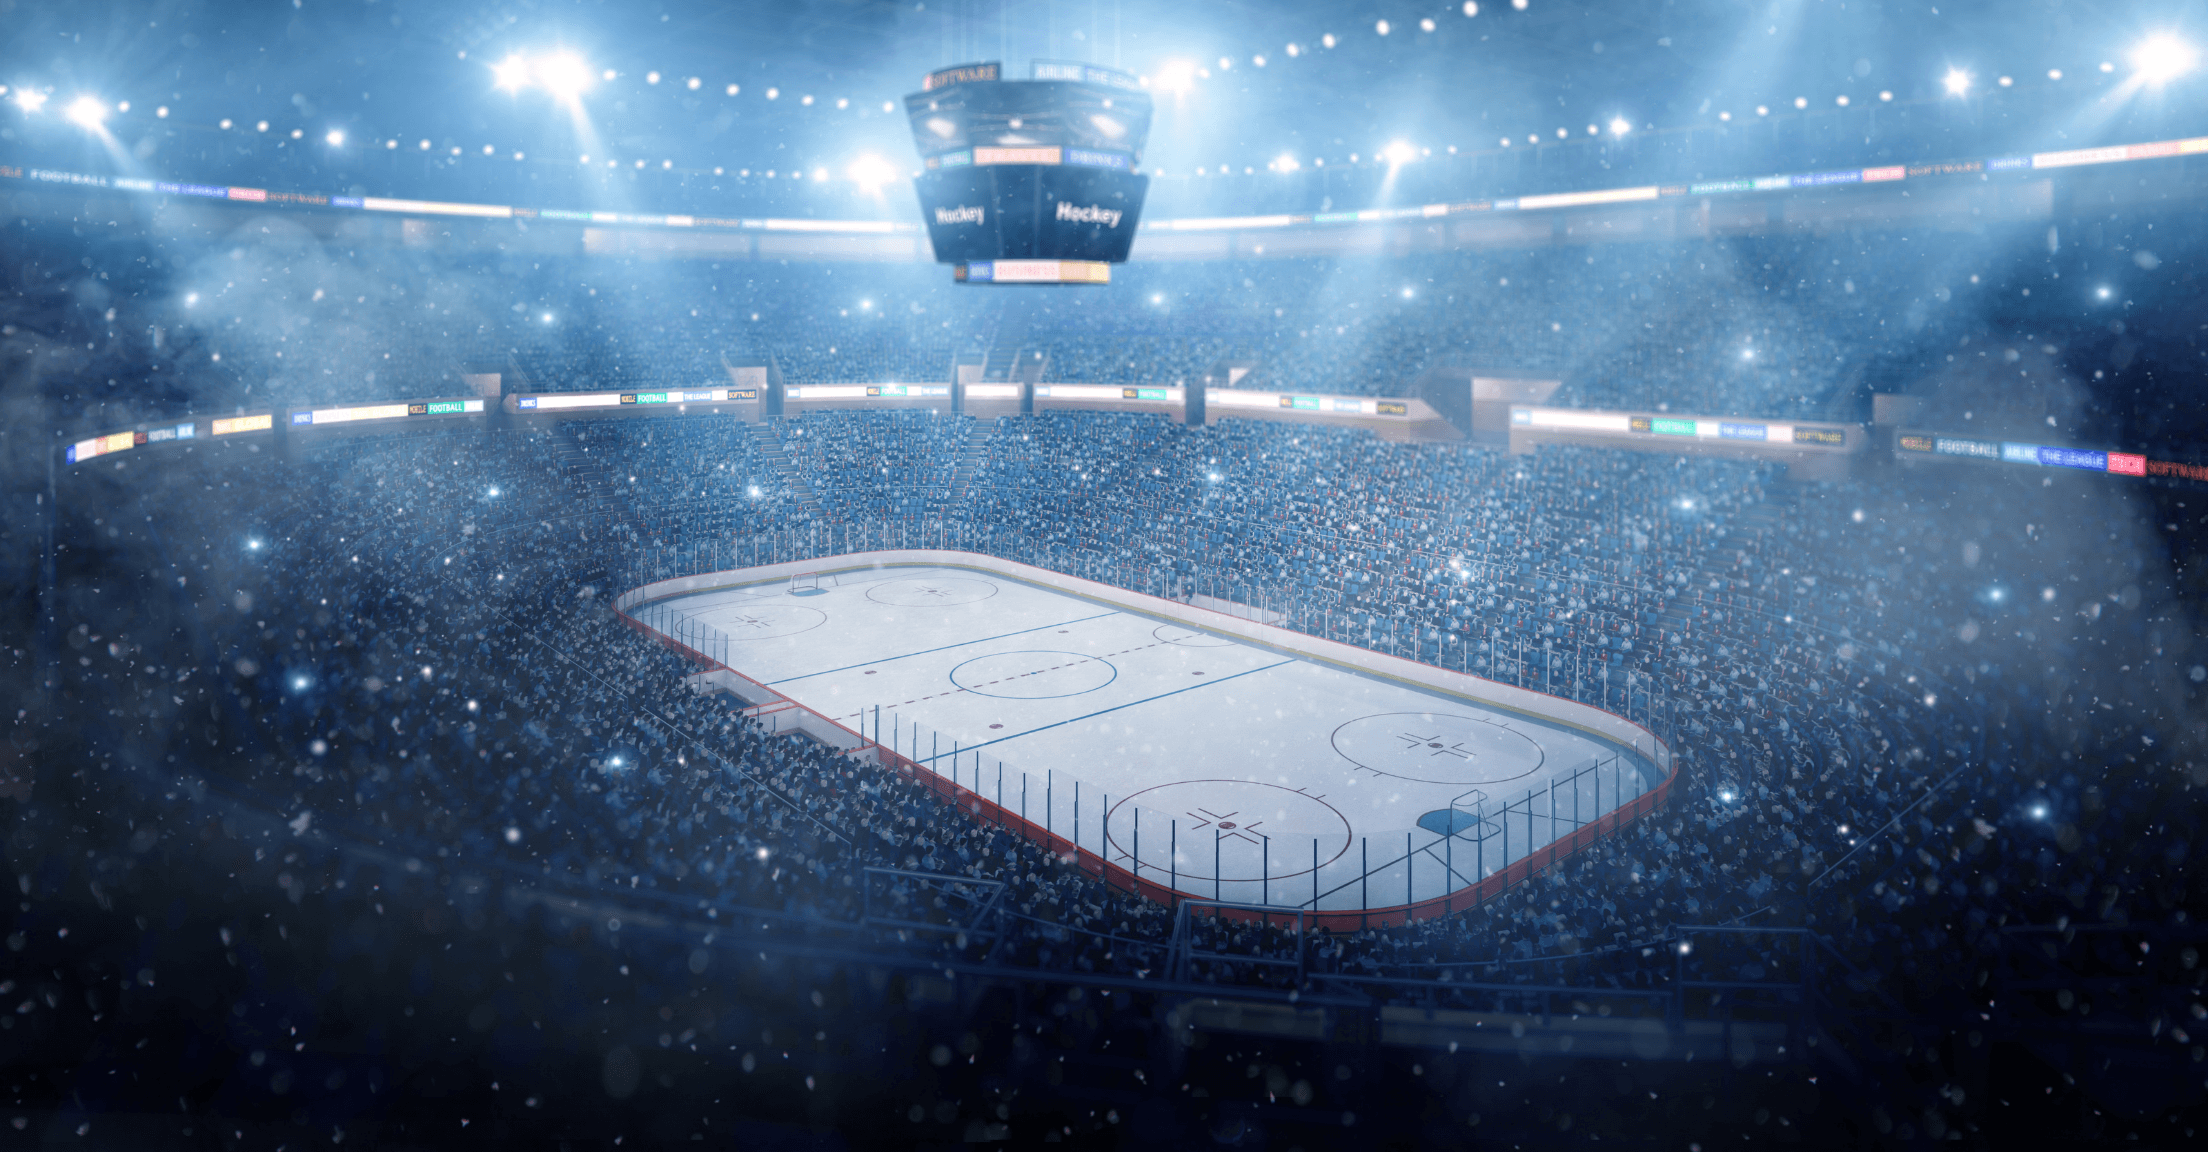 Hockey stadium from above